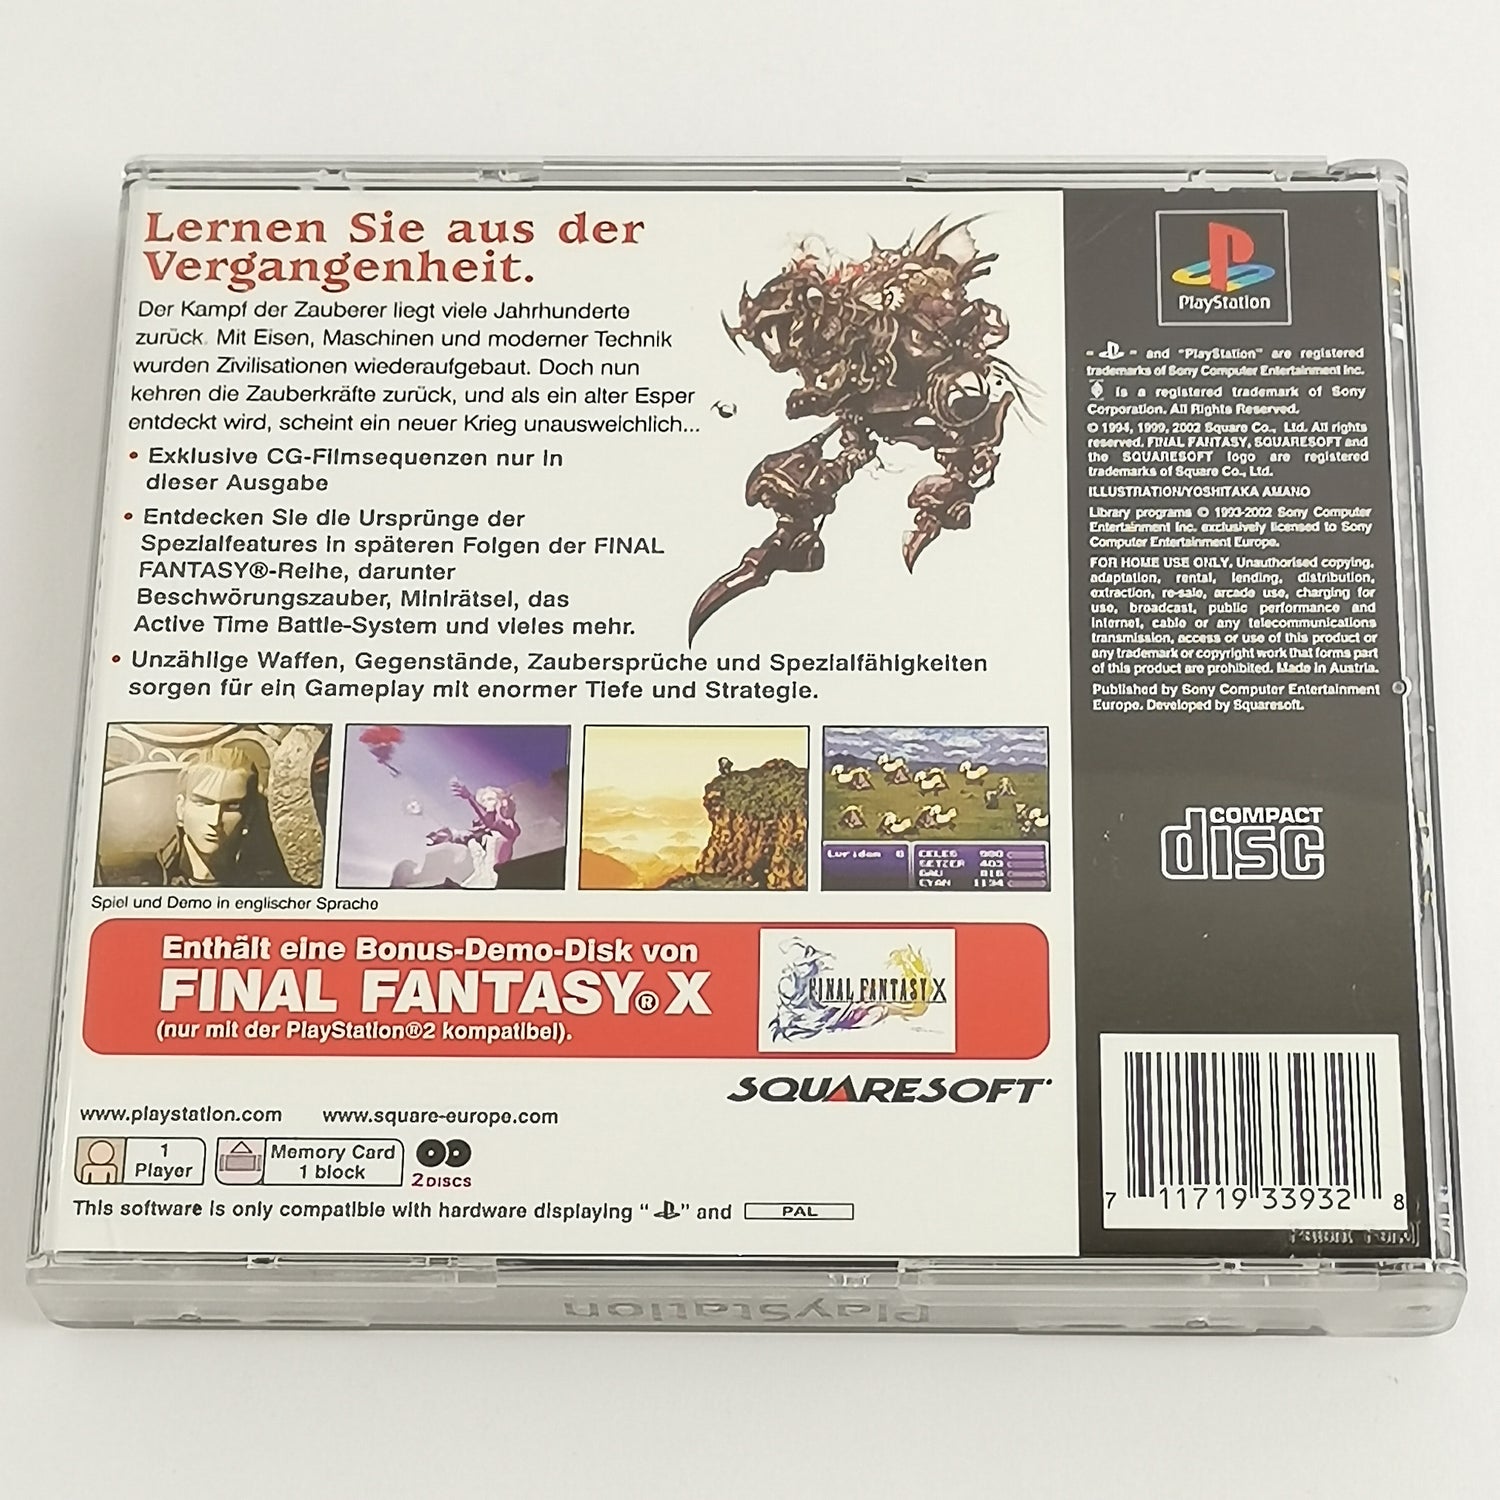 Sony Playstation 1 Game: Final Fantasy VI 6 + Demo - Original Packaging & Instructions | PS1 PAL